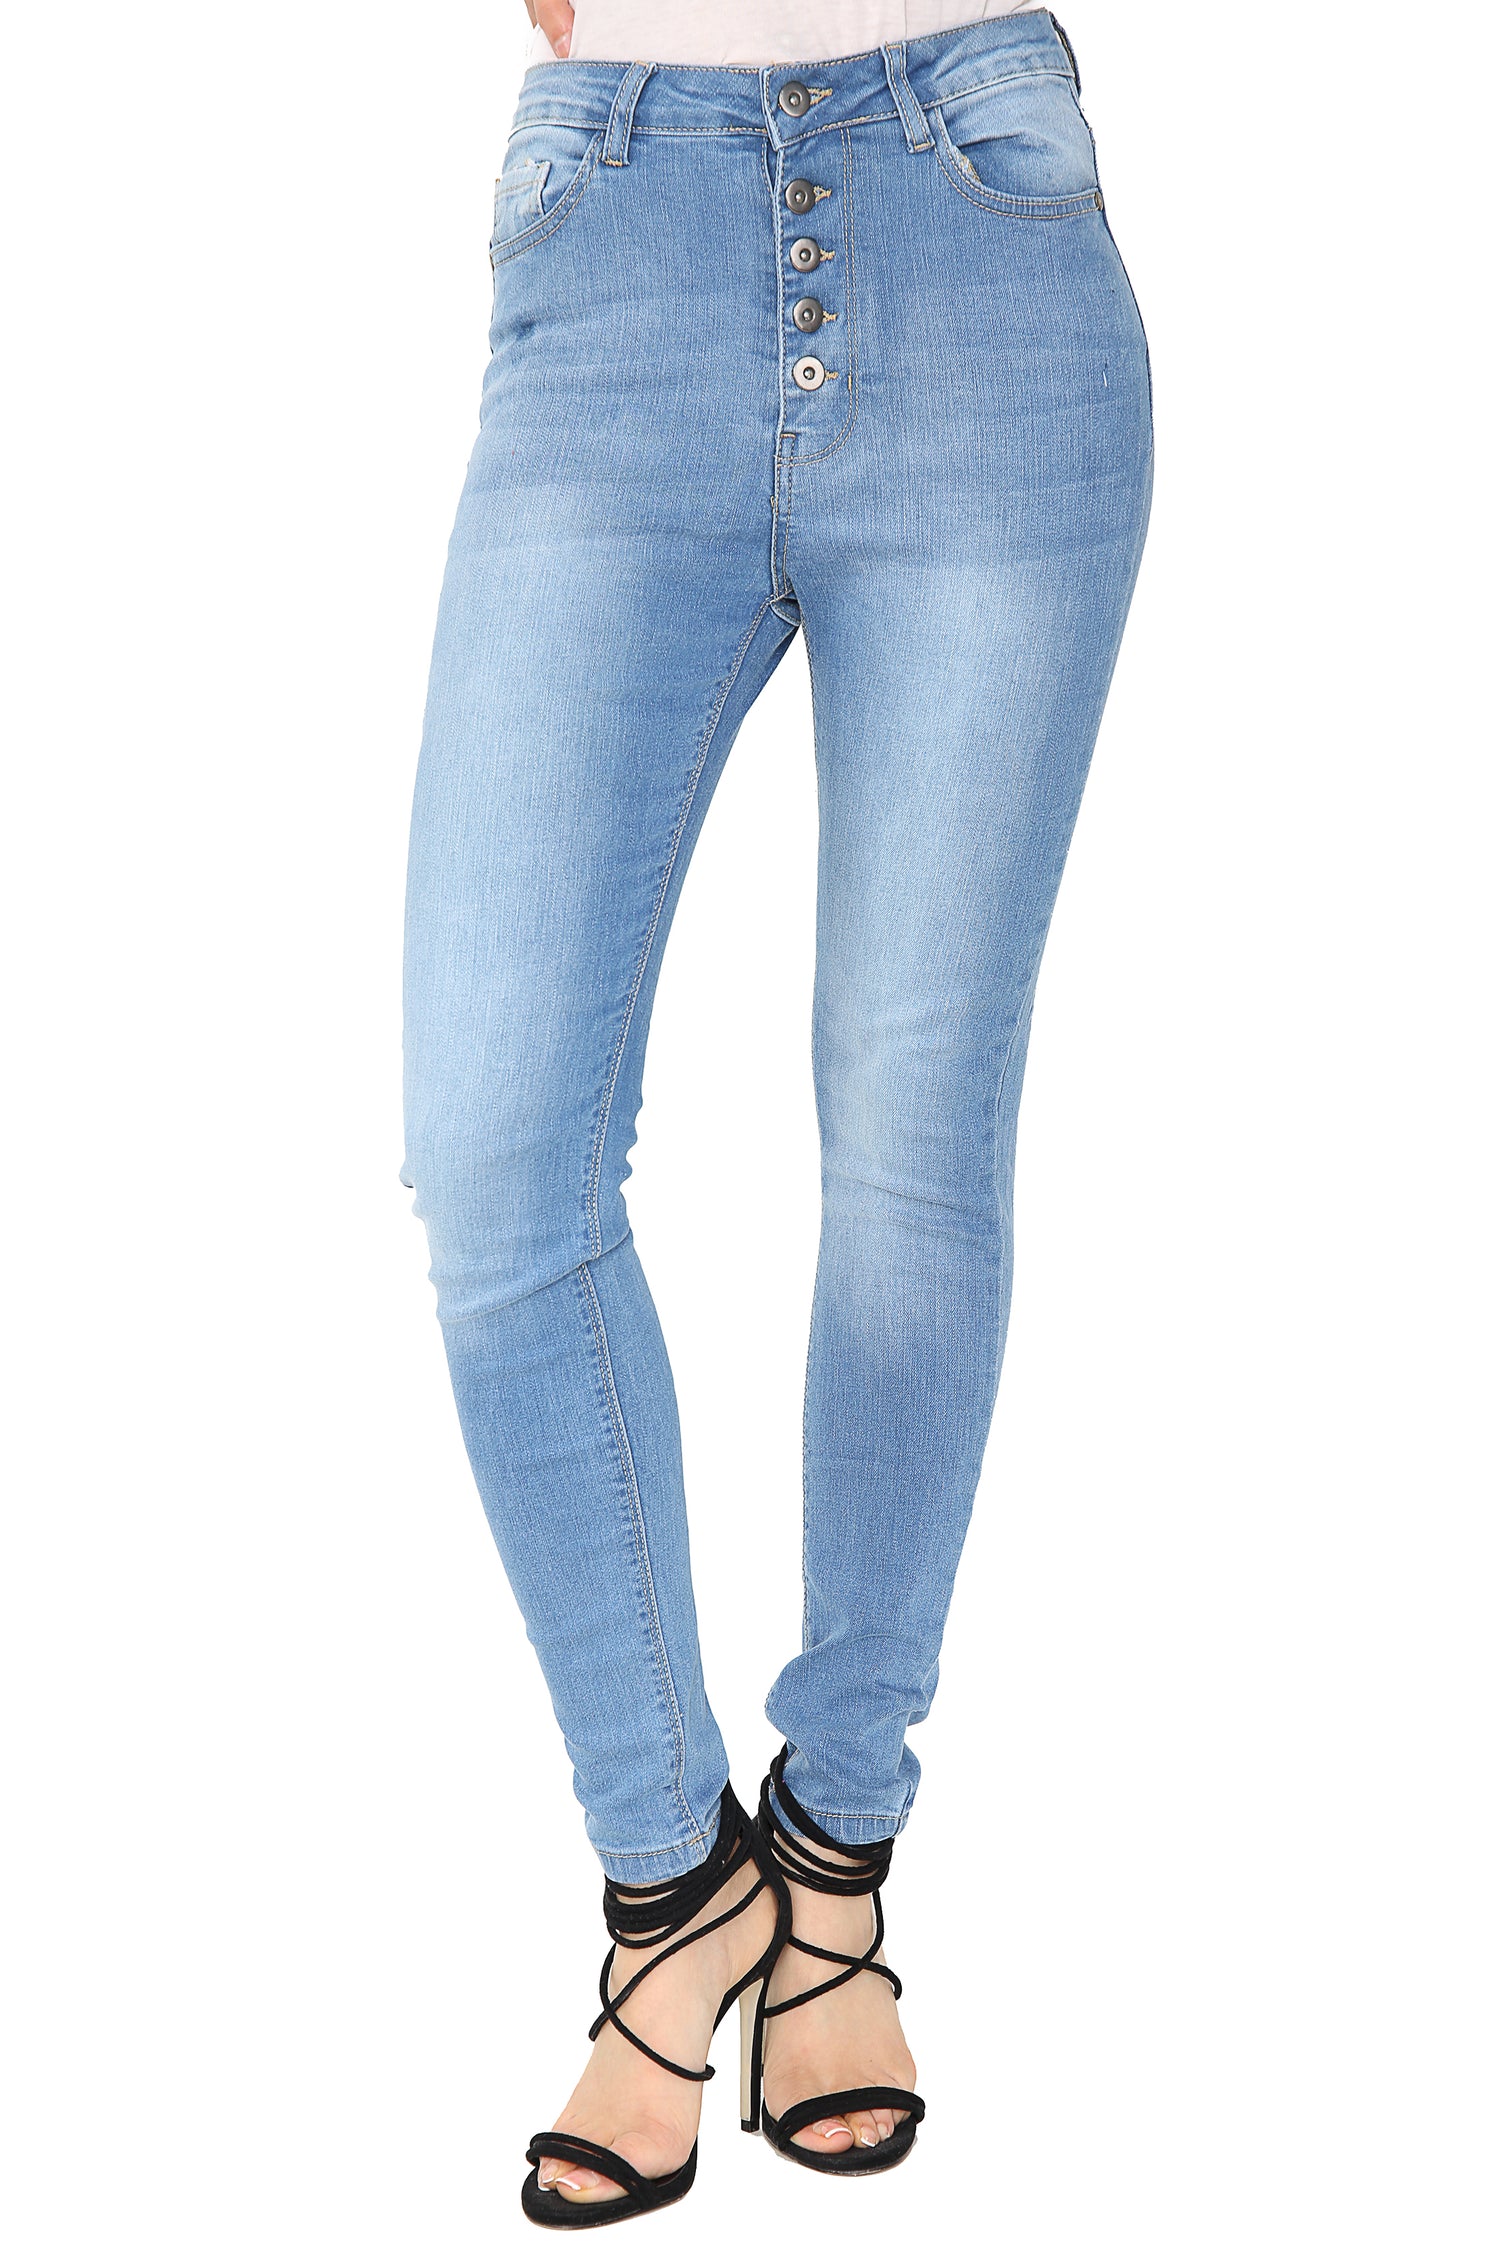 Ladies Multi Button Jeans, Slim fit, Pockets Front & Back, Light Wash, 76% Cotton, 22% Polyester, 25 Elastane